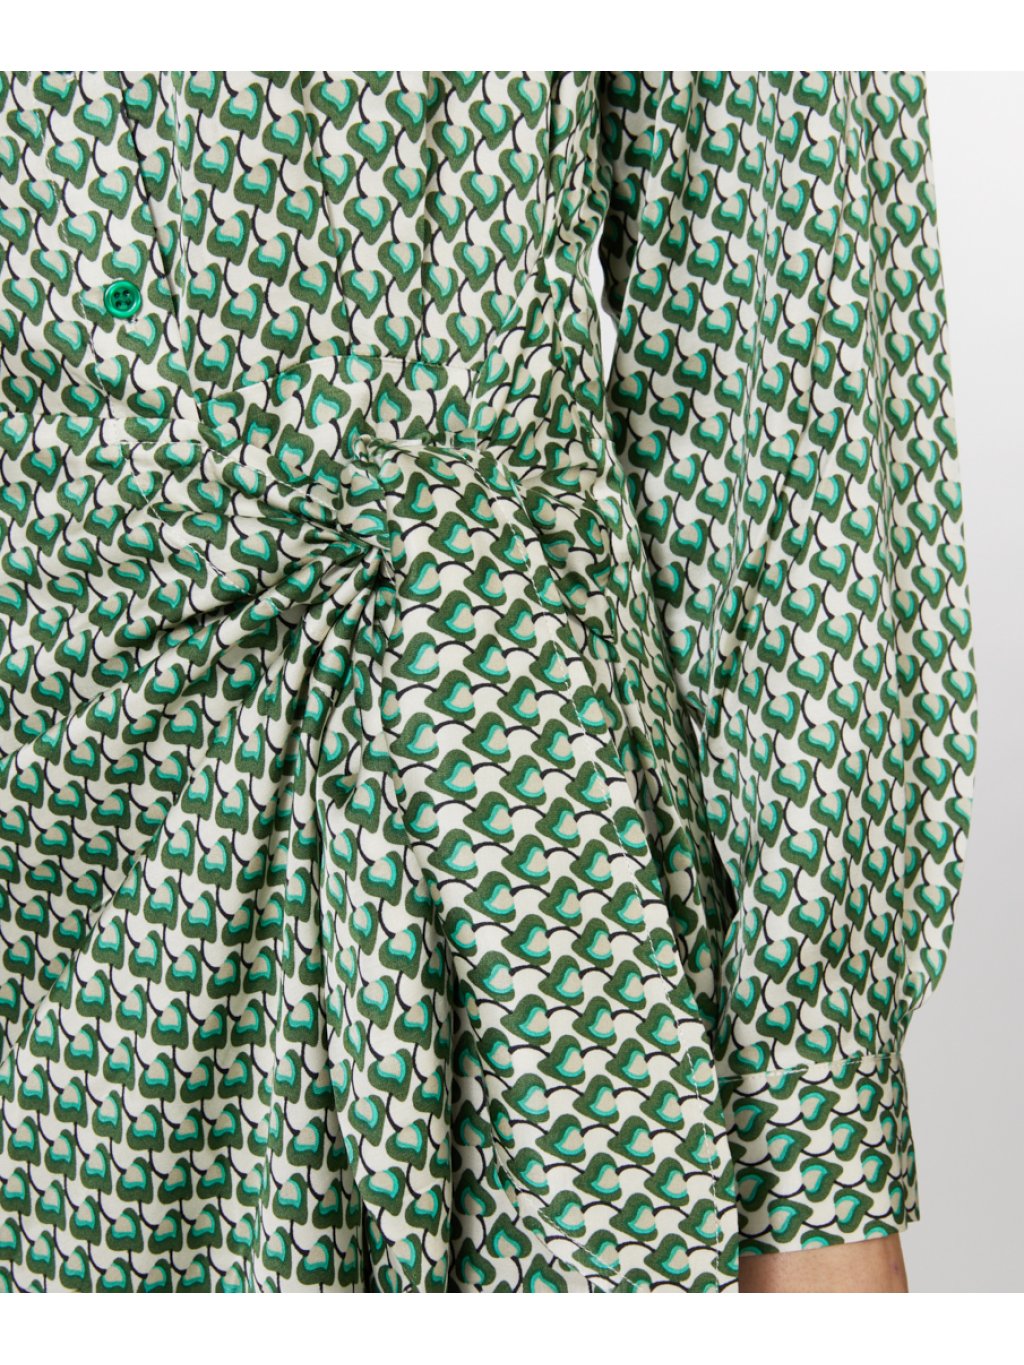 Šaty Esqualo 14002 béžovo zelené krátké zavinovací